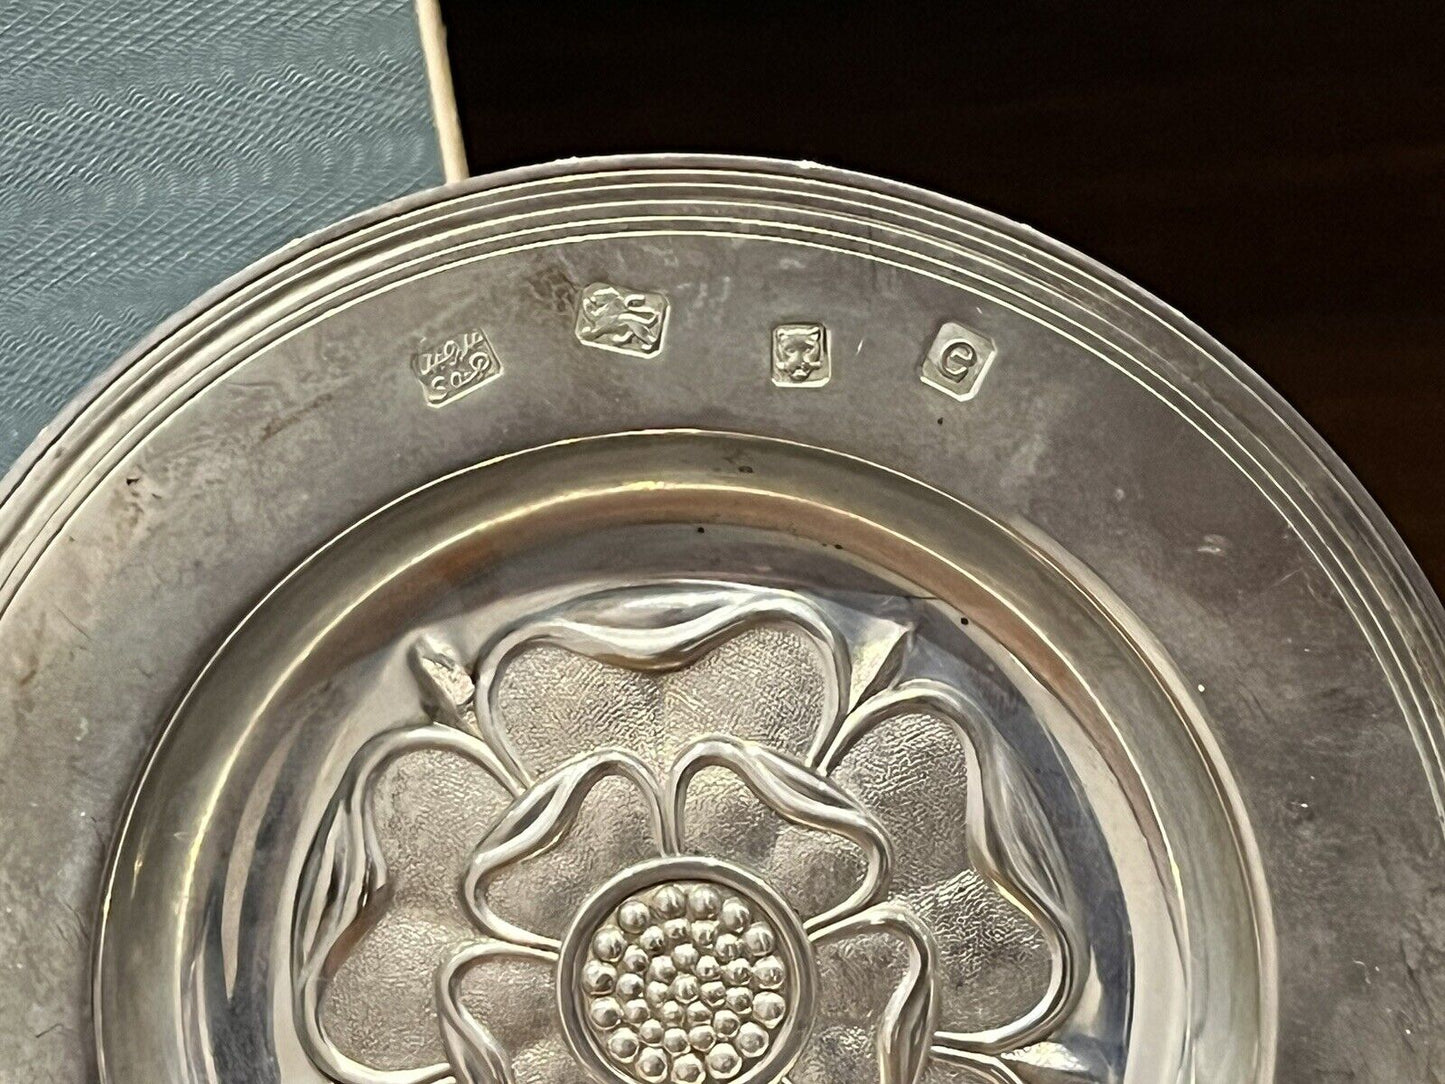 Solid Silver Reproduction Tudor Bowl In Original Box